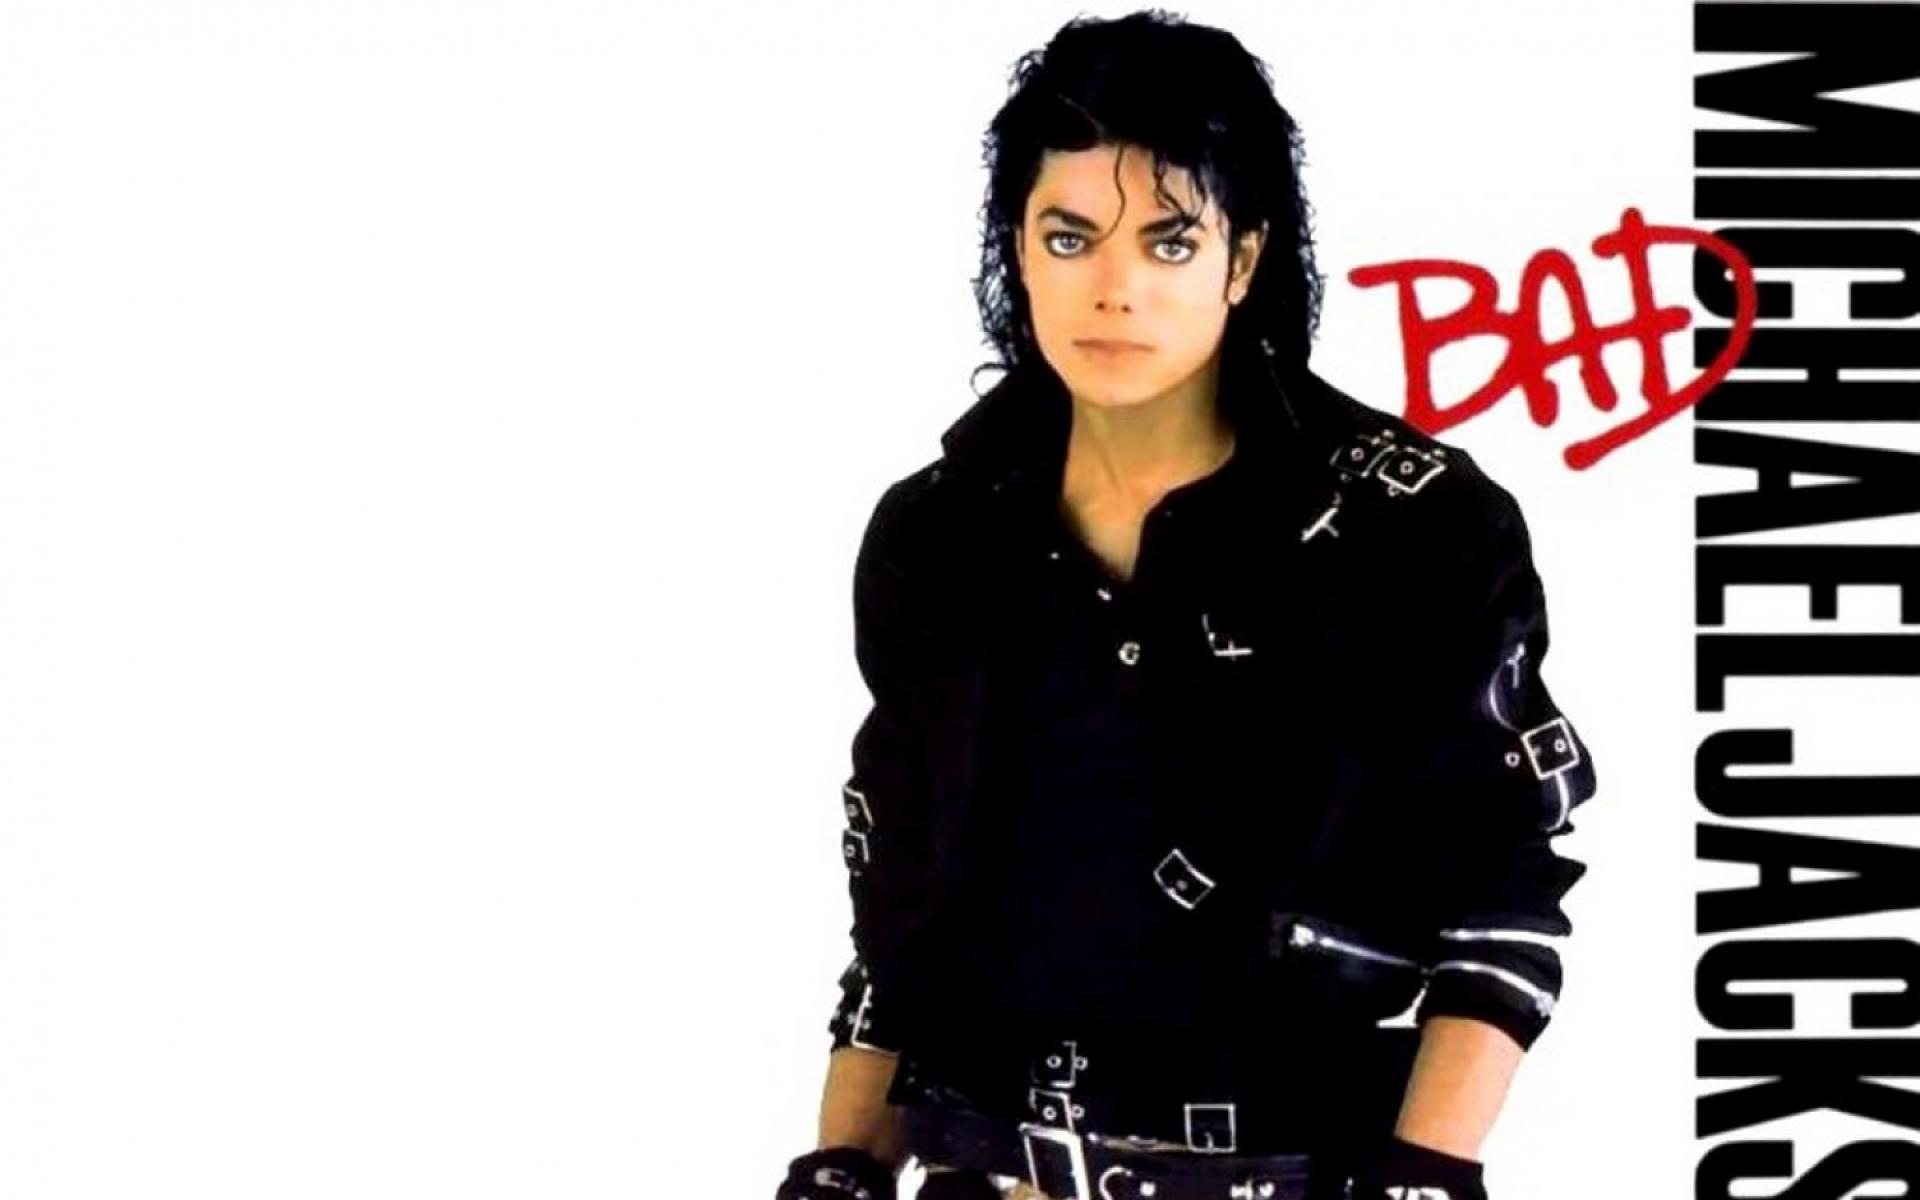 Michael Jackson Wallpaper Download - Widescreen HD Wallpapers